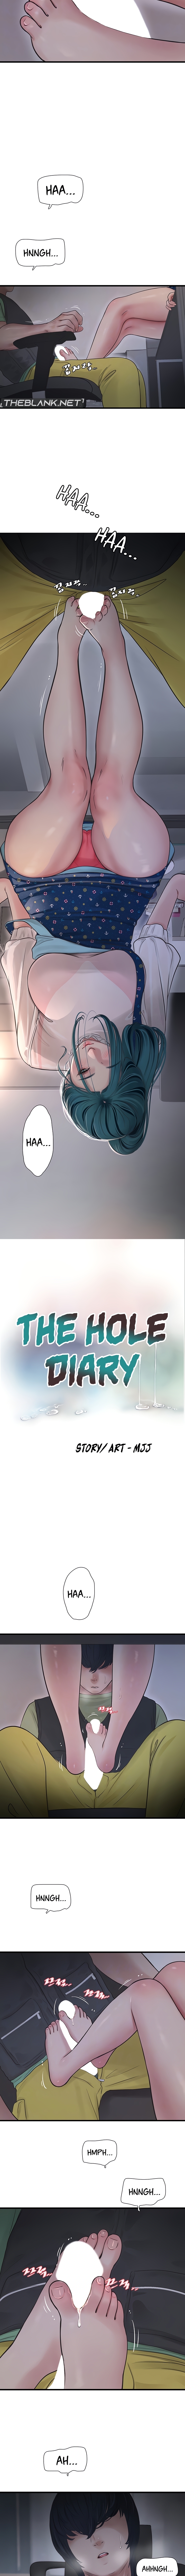 The Hole Diary NEW image